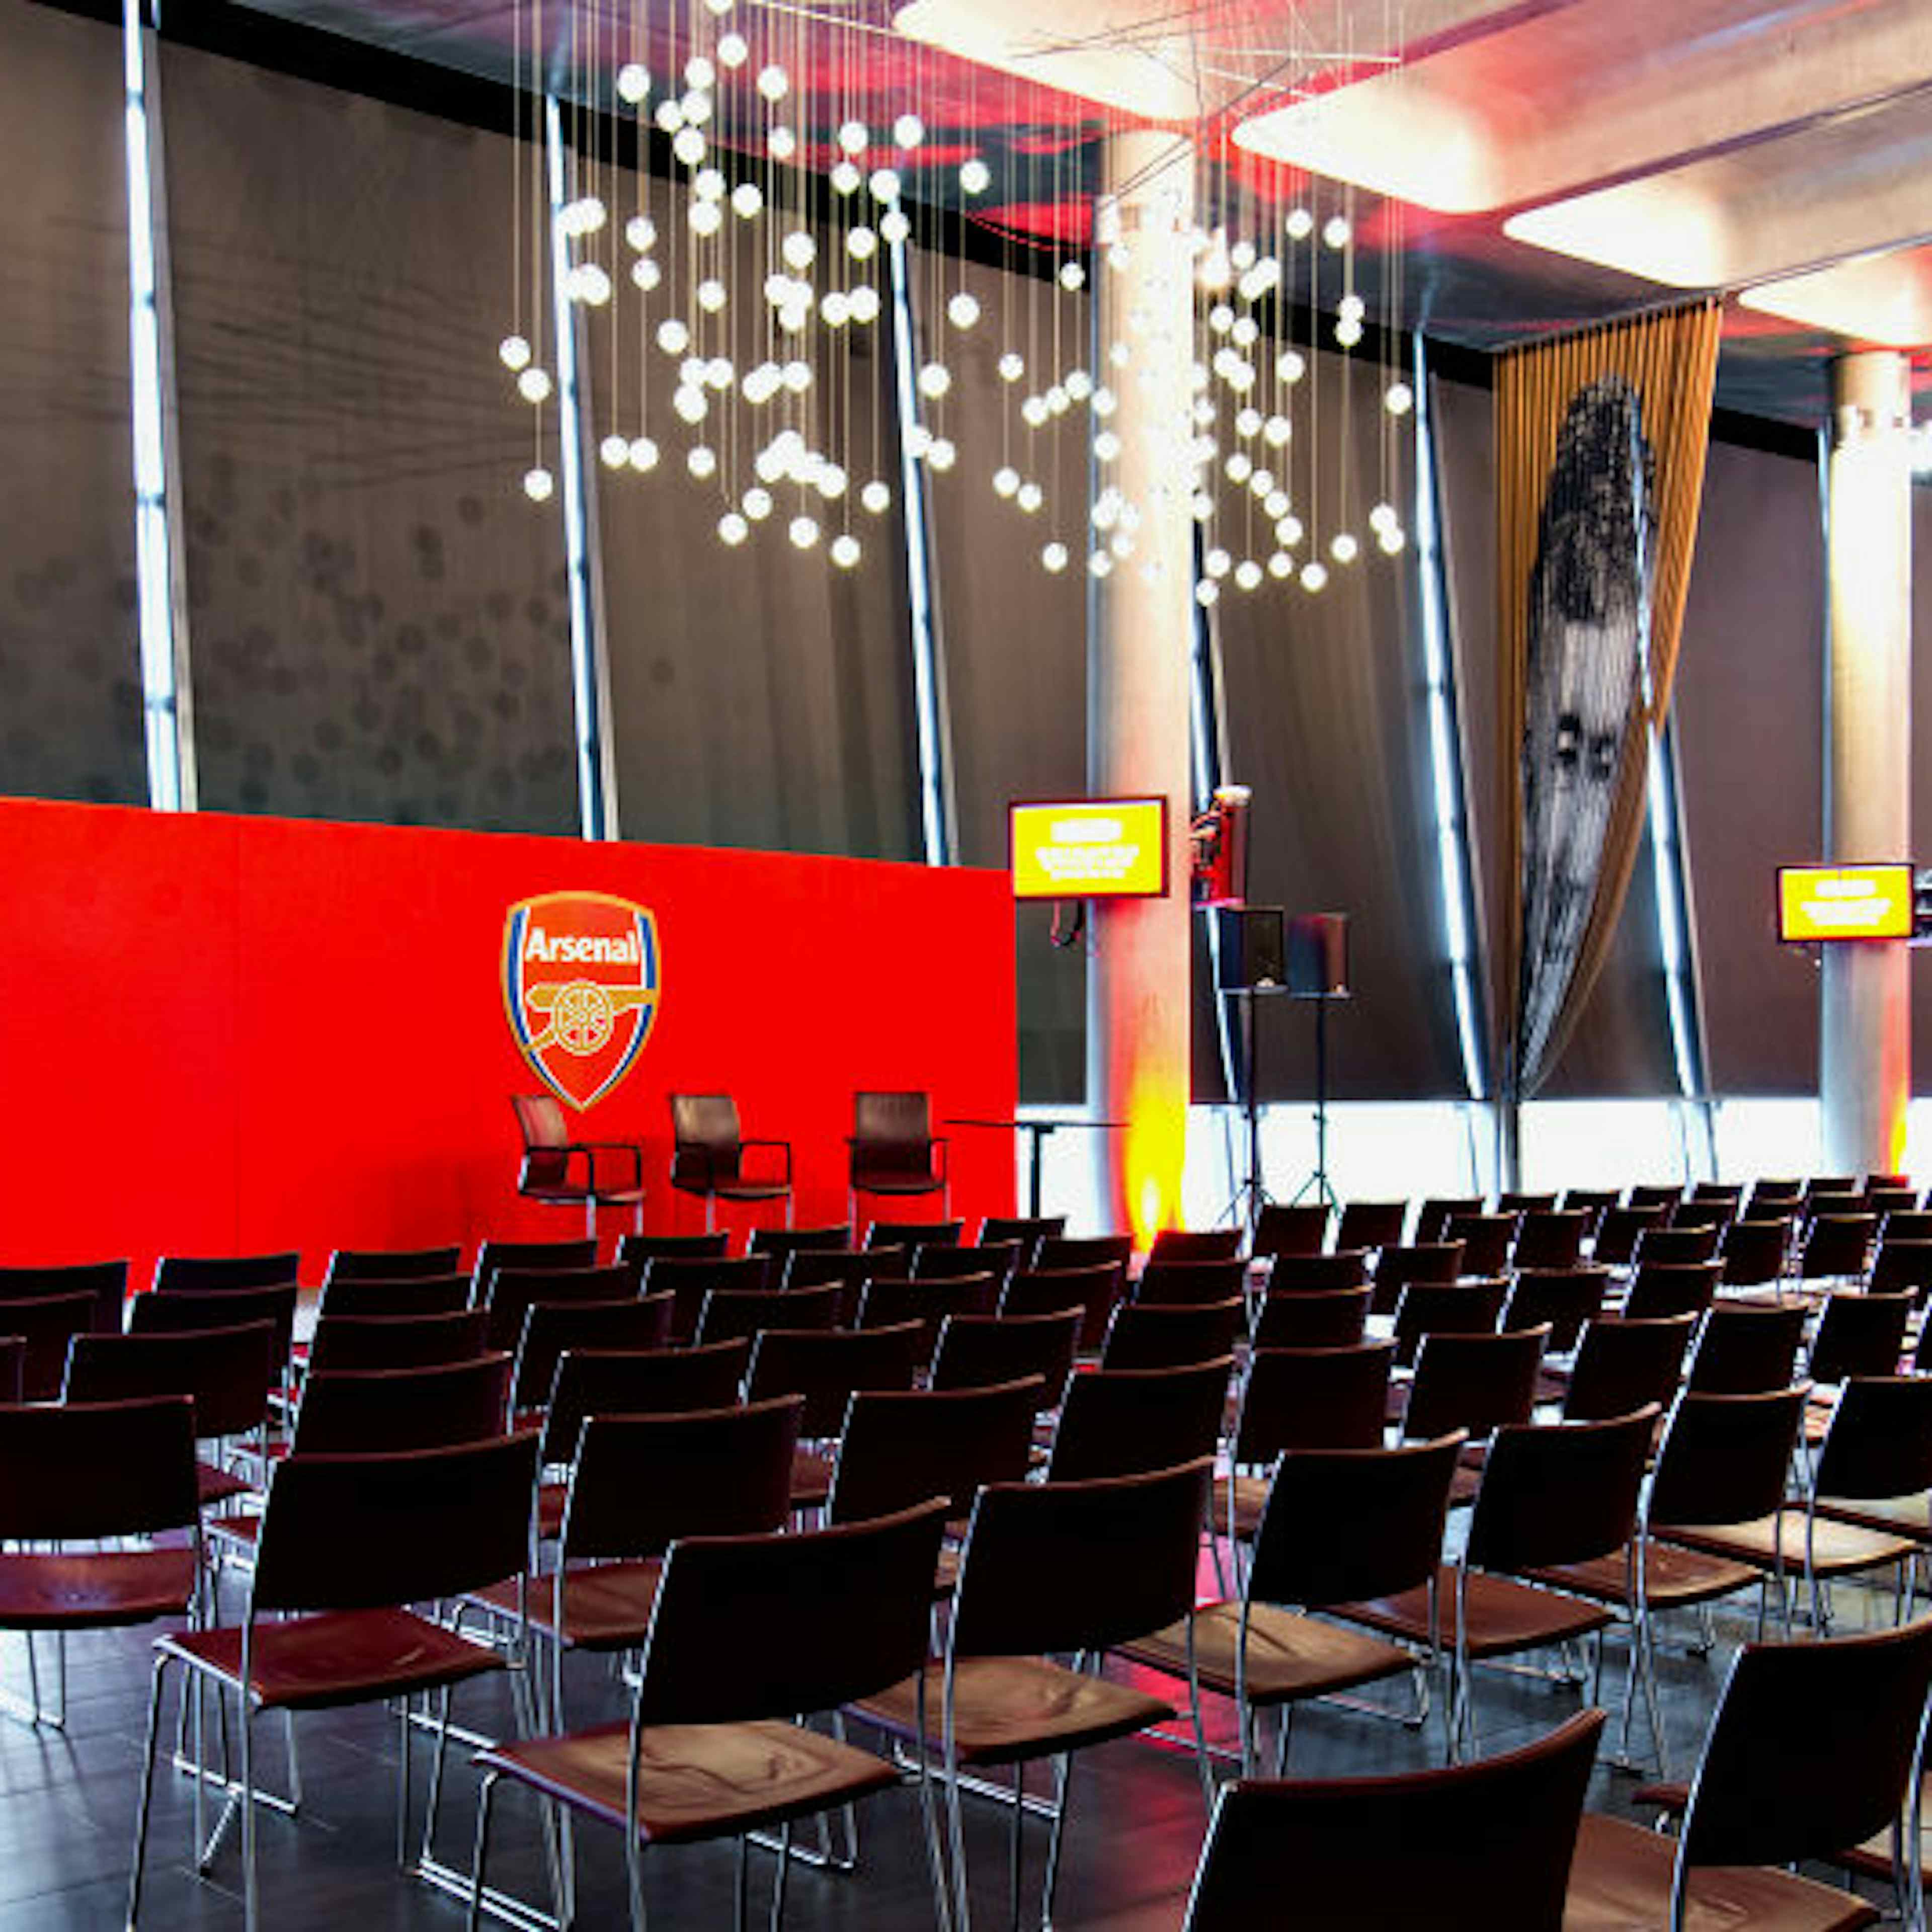 Arsenal Football Club - Emirates Stadium - Woolwich image 3